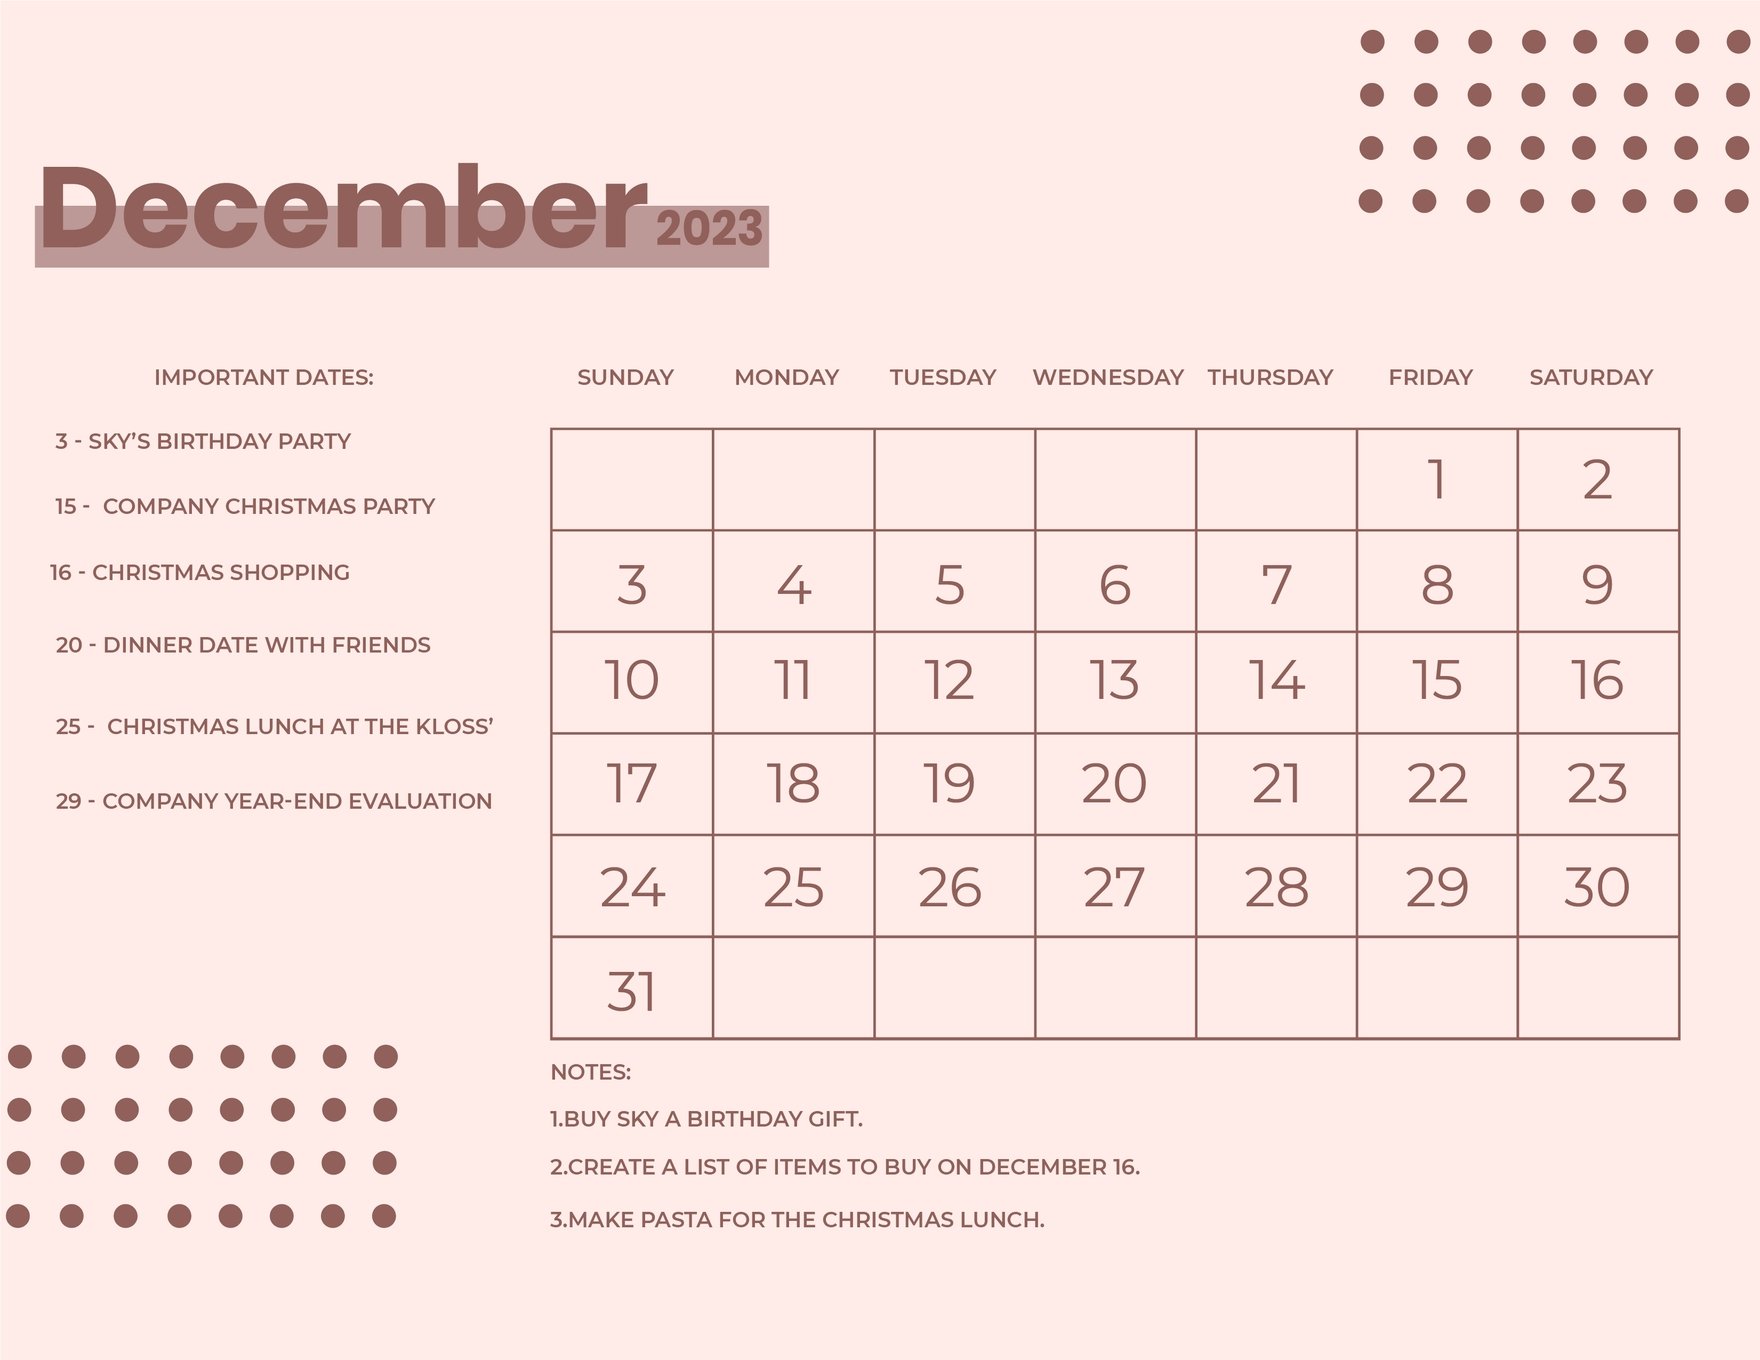 Printable December 2023 Monthly Calendar in Word, Google Docs, Illustrator, EPS, SVG, JPG